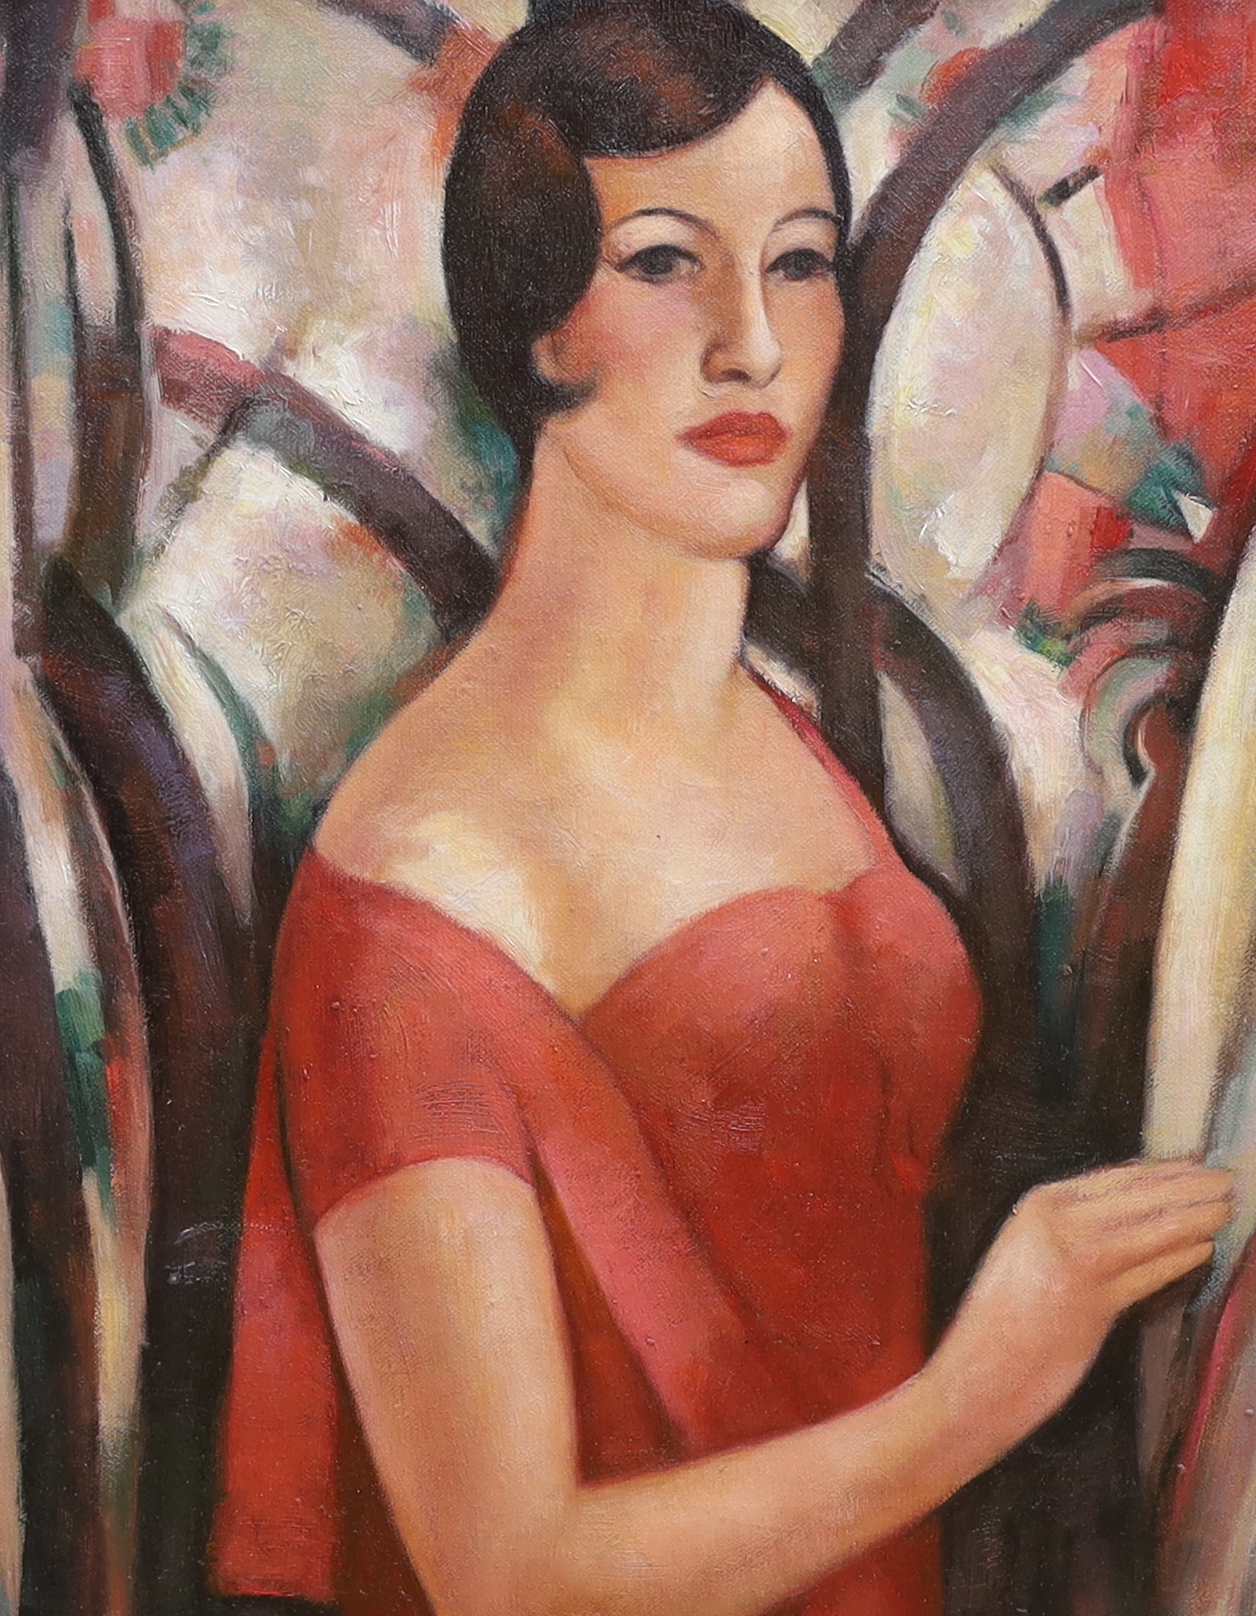 Decorative oil on board, Portrait of an Art Deco woman, 42 x 34cm